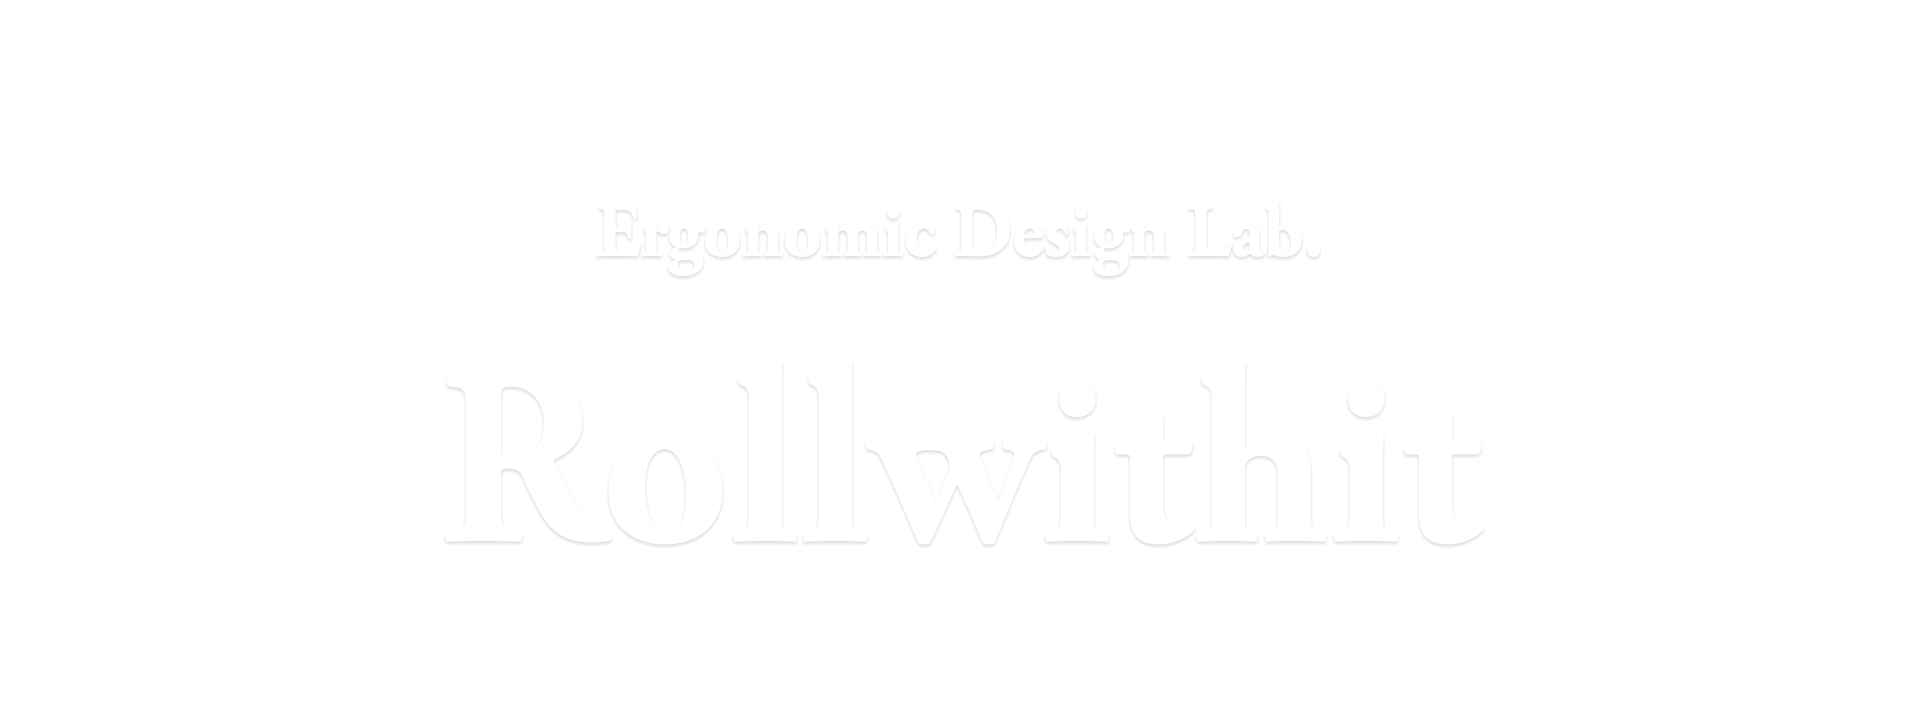  Ergonomic Design Lab. Rollwithit